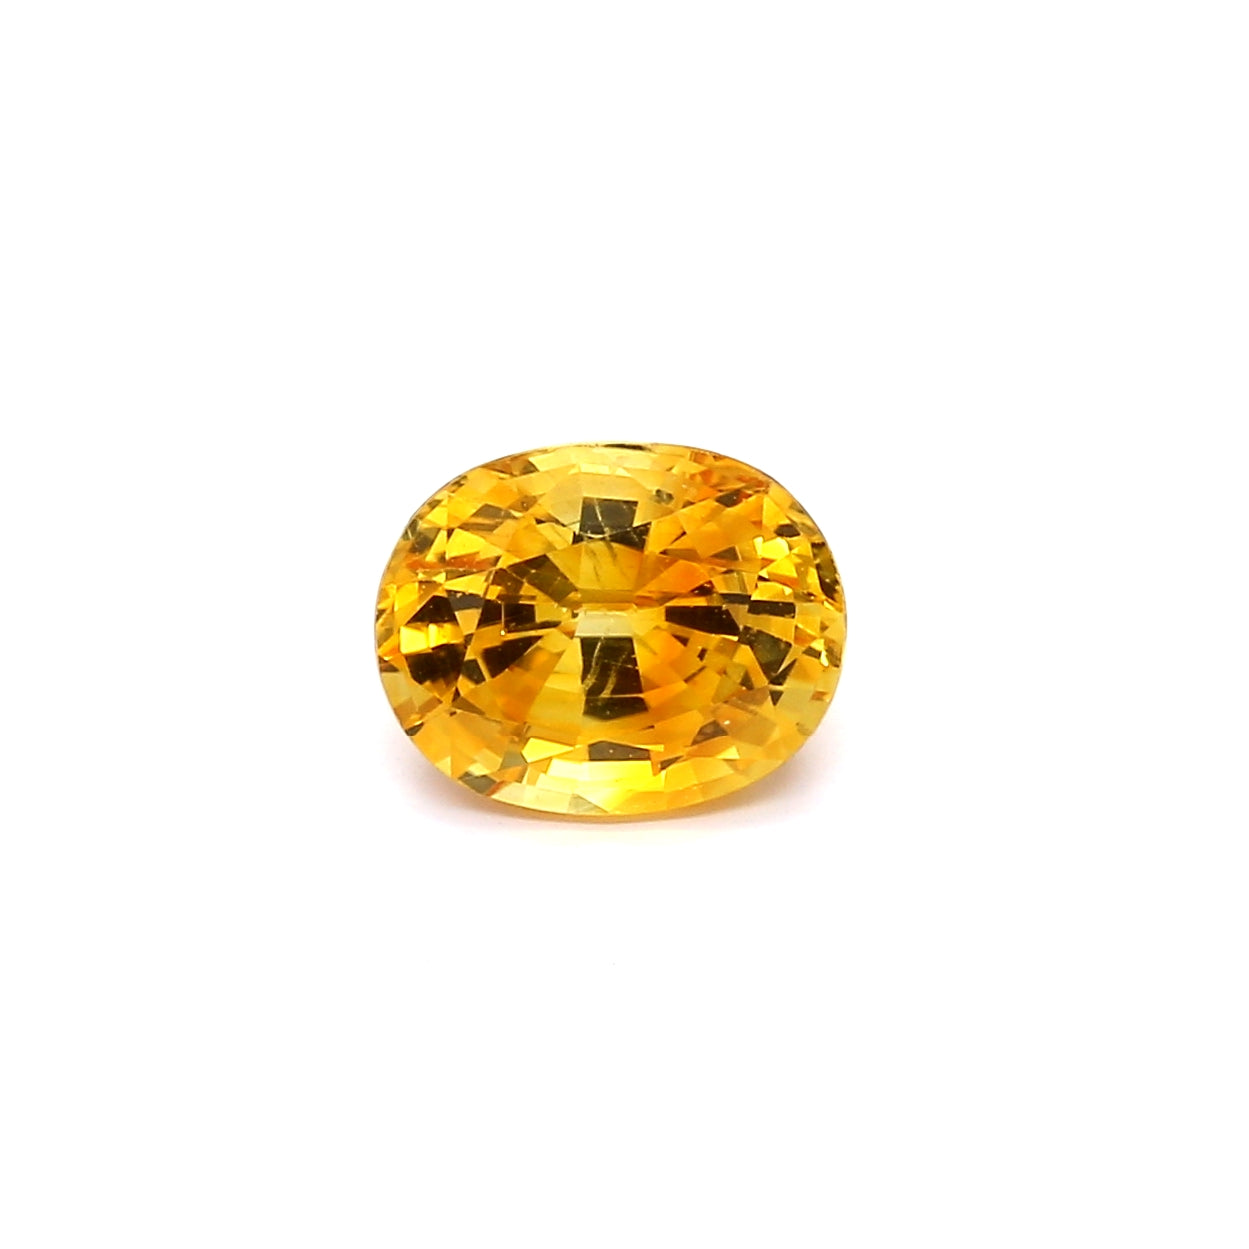 2.08ct Yellow, Oval Sapphire, Heated, Sri Lanka - 8.19 x 6.61 x 4.74mm